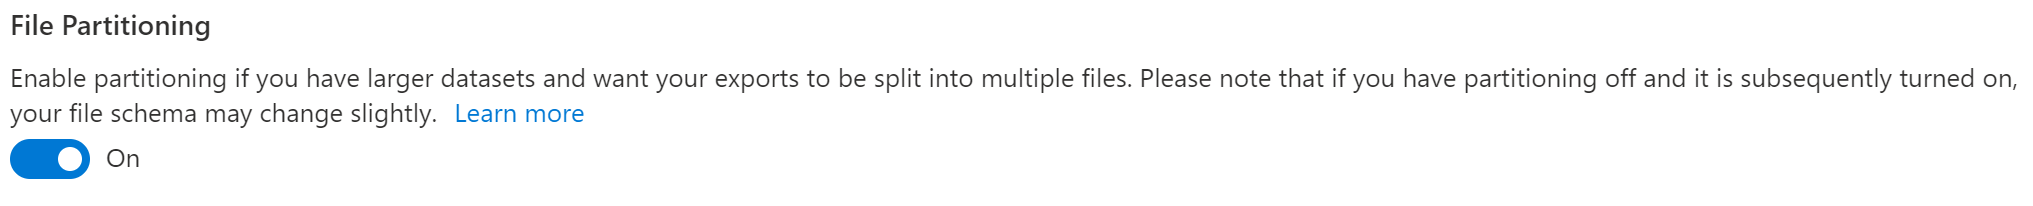 Screenshot showing File Partitioning option.